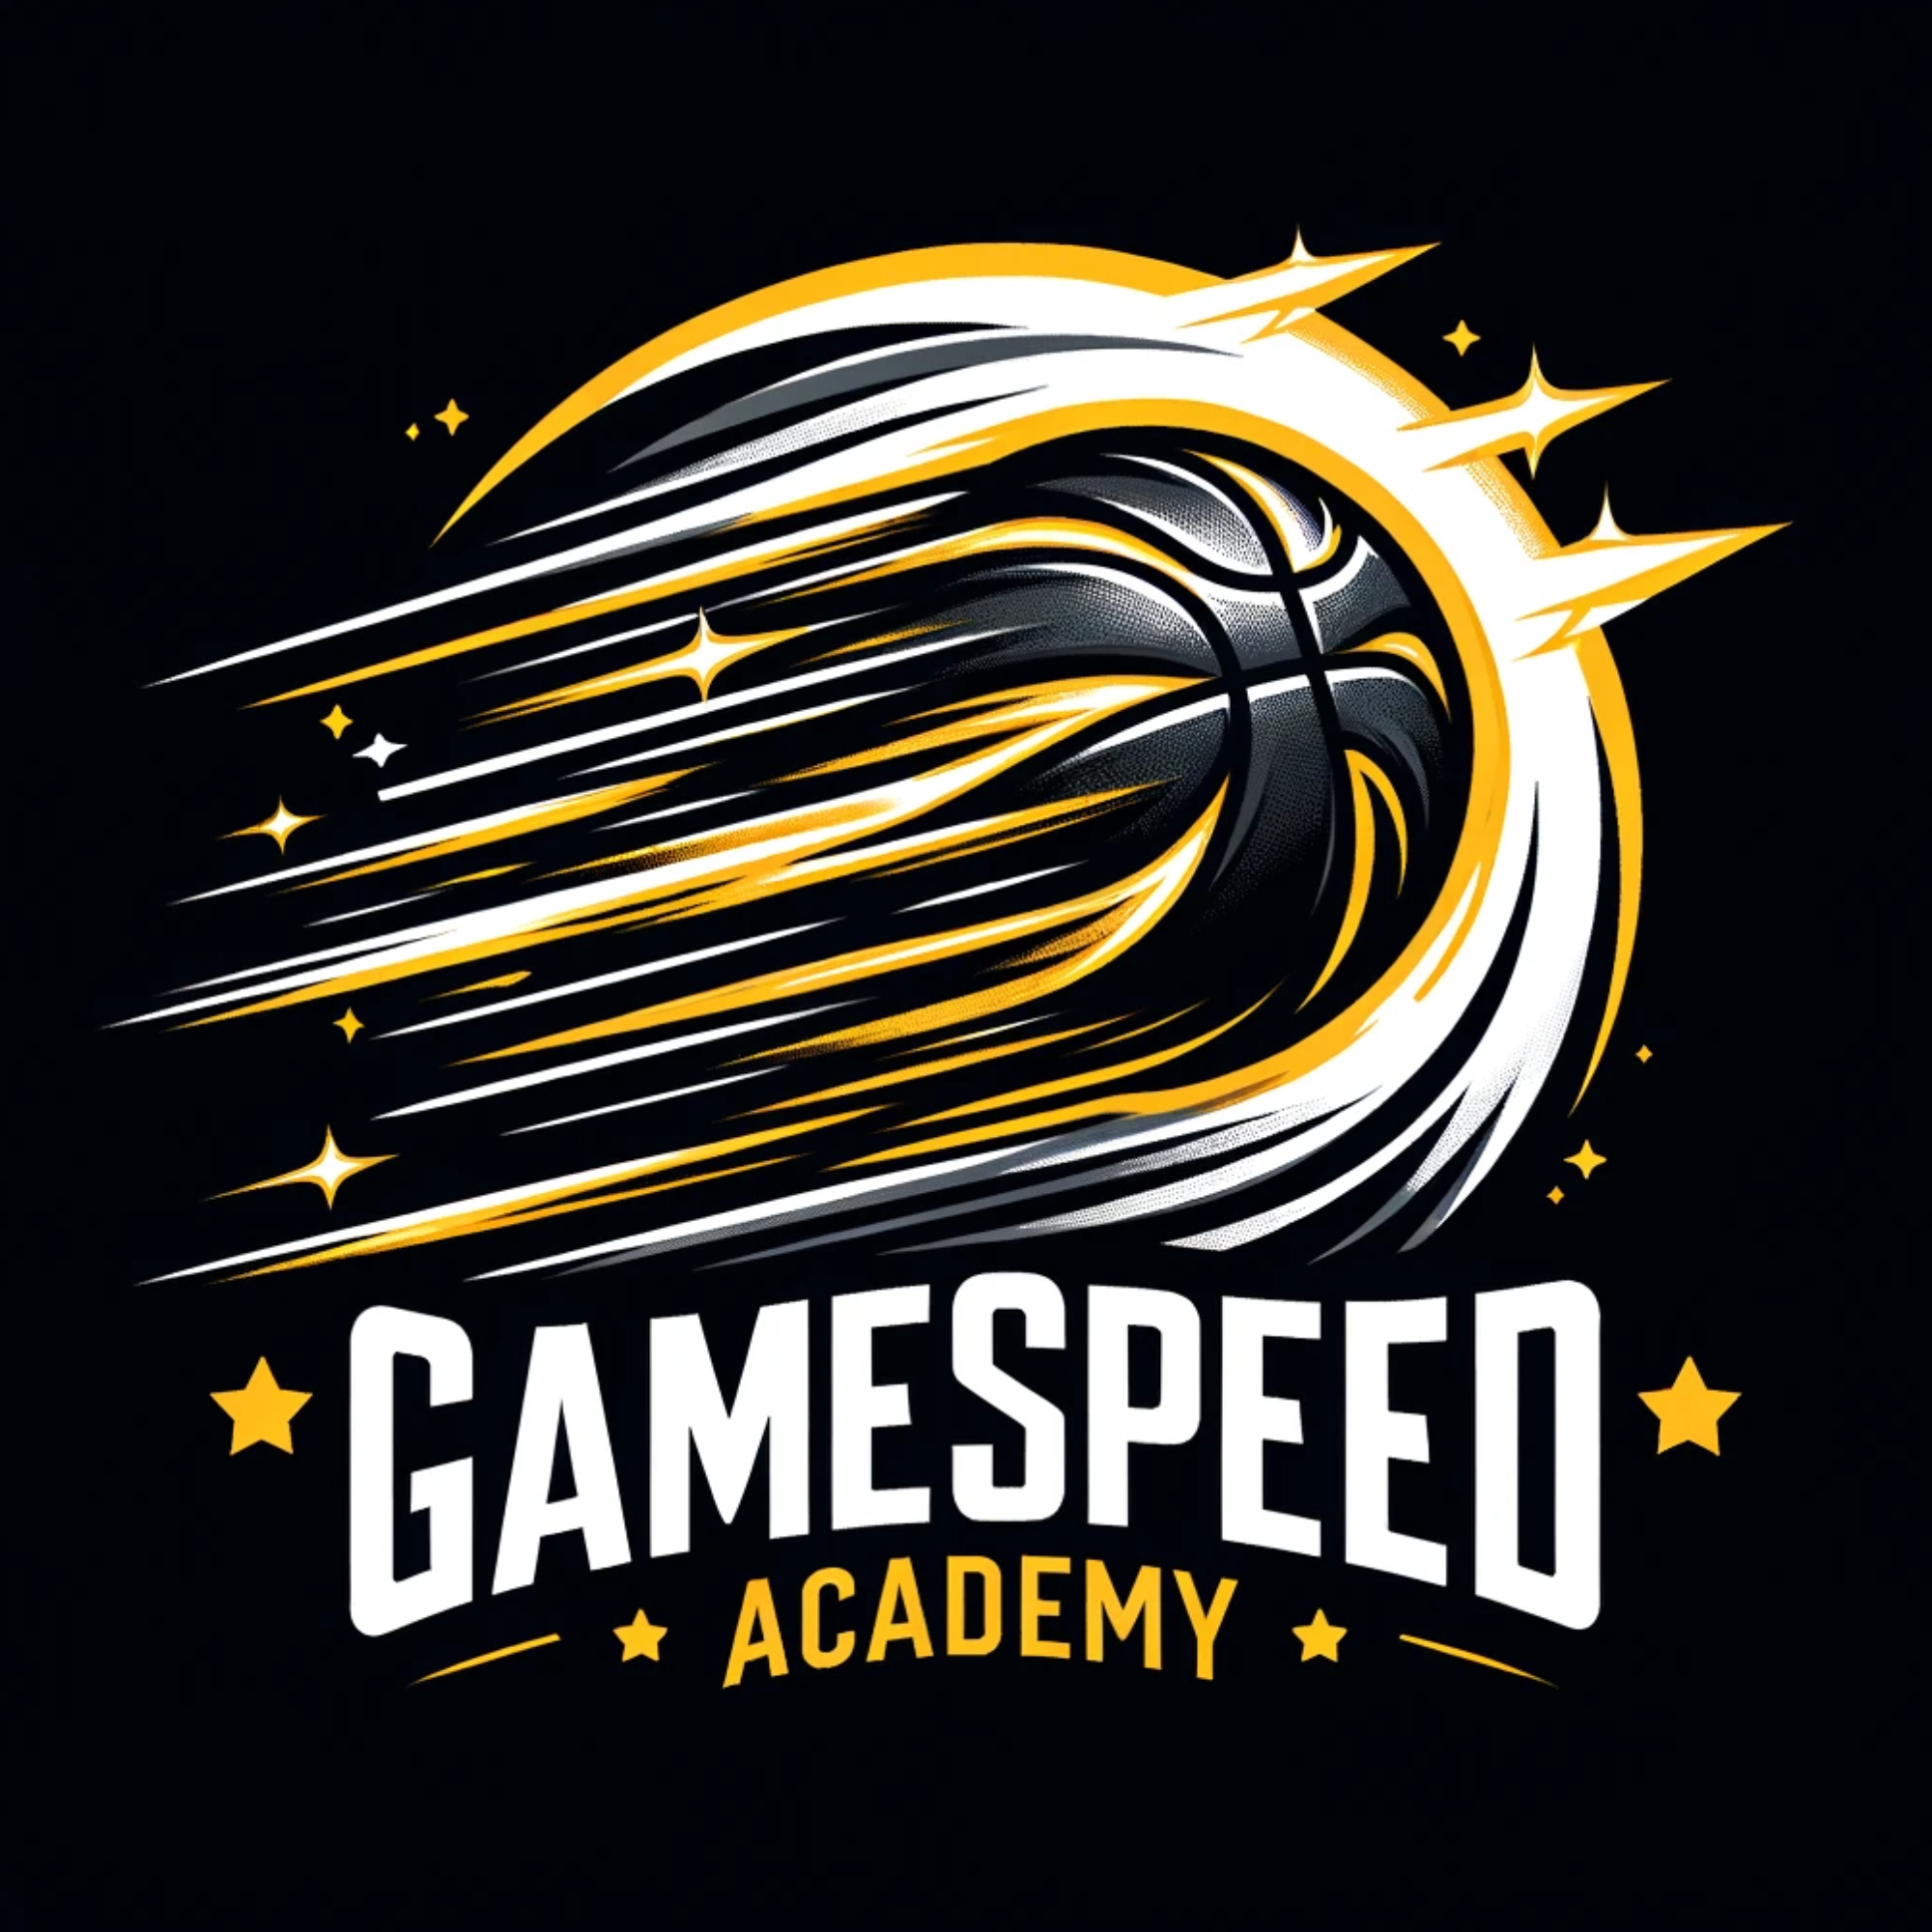 Organization logo for GameSpeed Academy